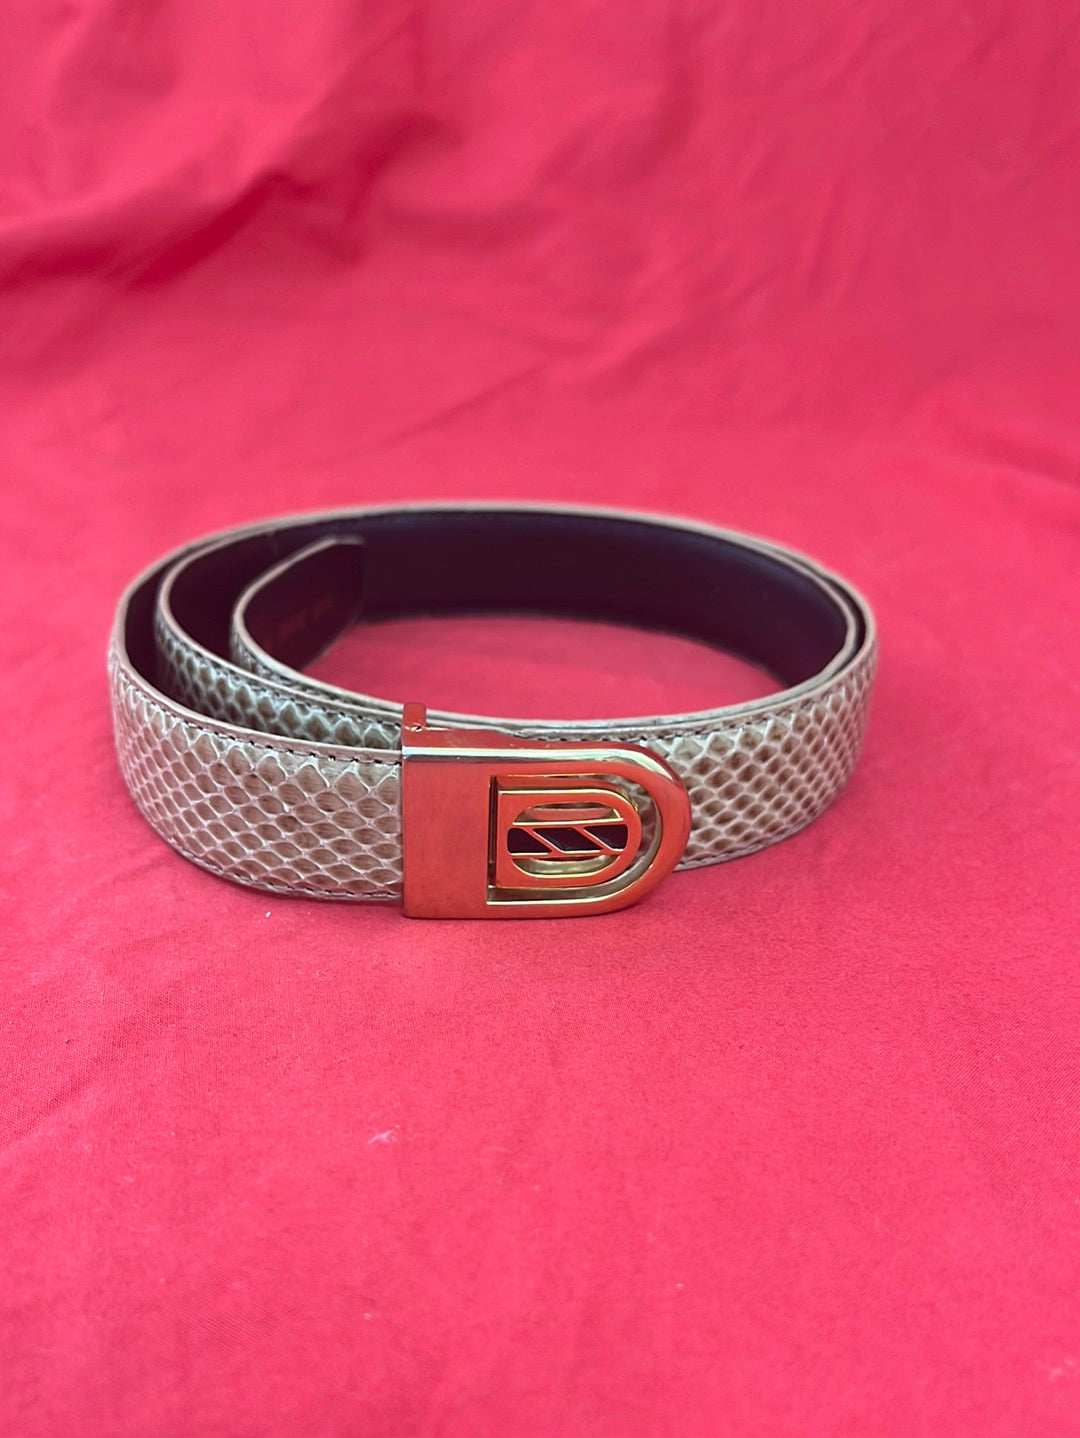 VTG -- Olive Snakeskin on Leather Thin Belt with Retro Buckle